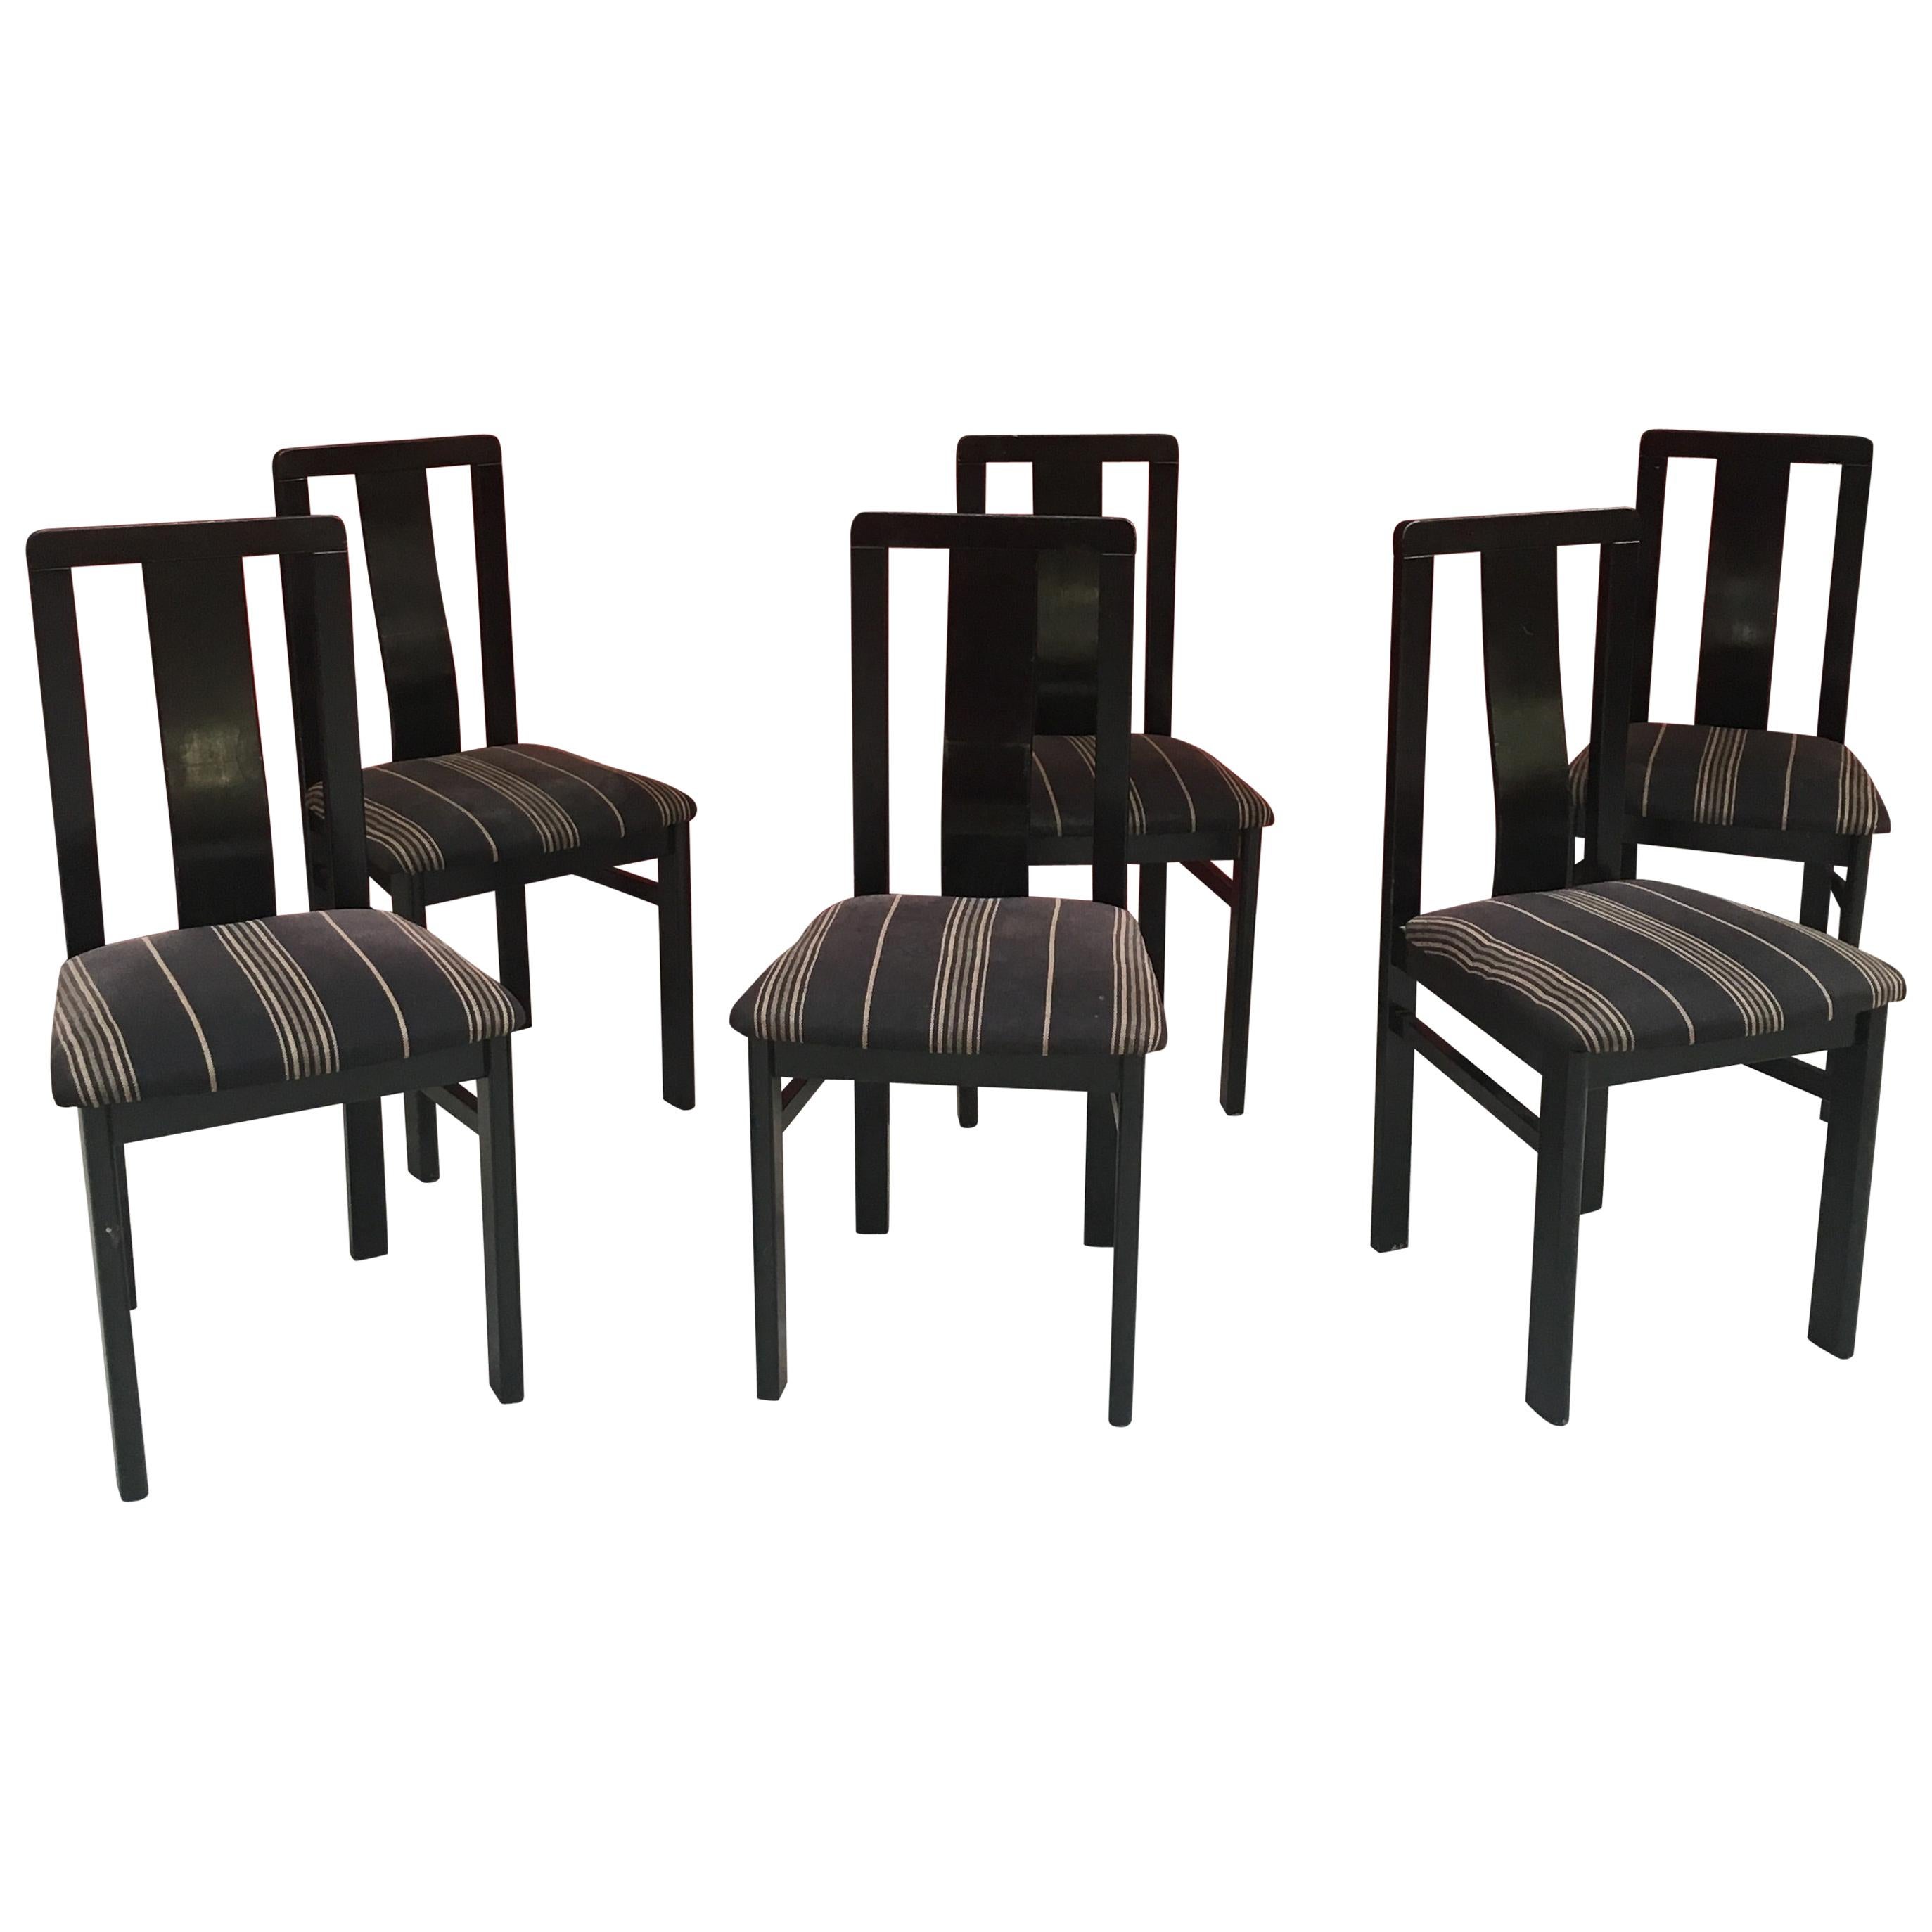 6 Chairs in Blackened Wood, circa 1960-1970